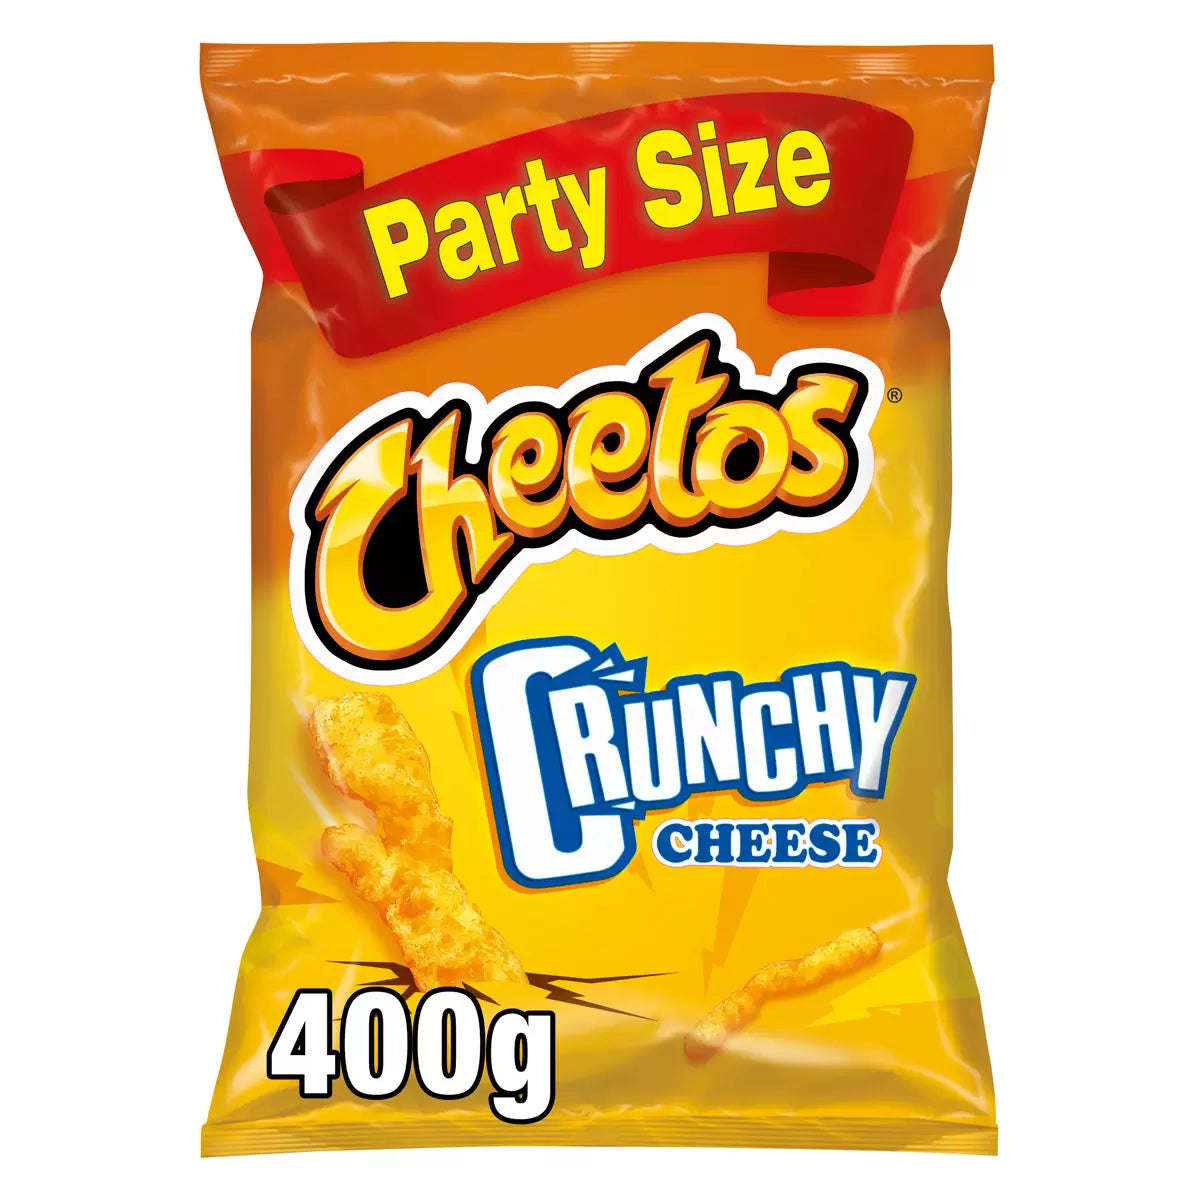 Cheetos Crunchy Cheese - 400g